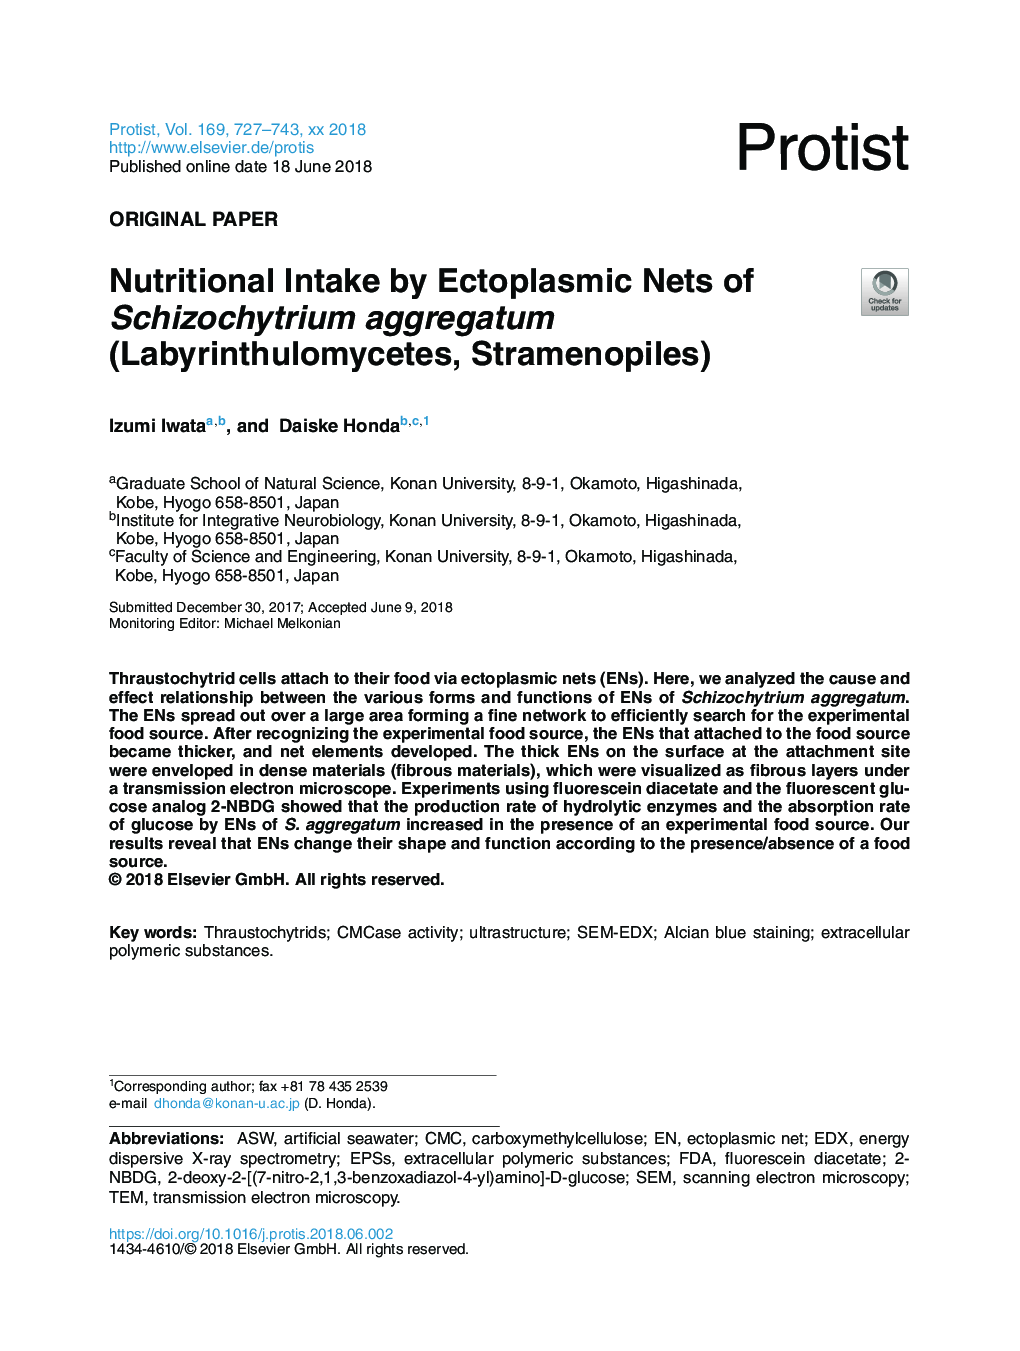 Nutritional Intake by Ectoplasmic Nets of Schizochytrium aggregatum (Labyrinthulomycetes, Stramenopiles)